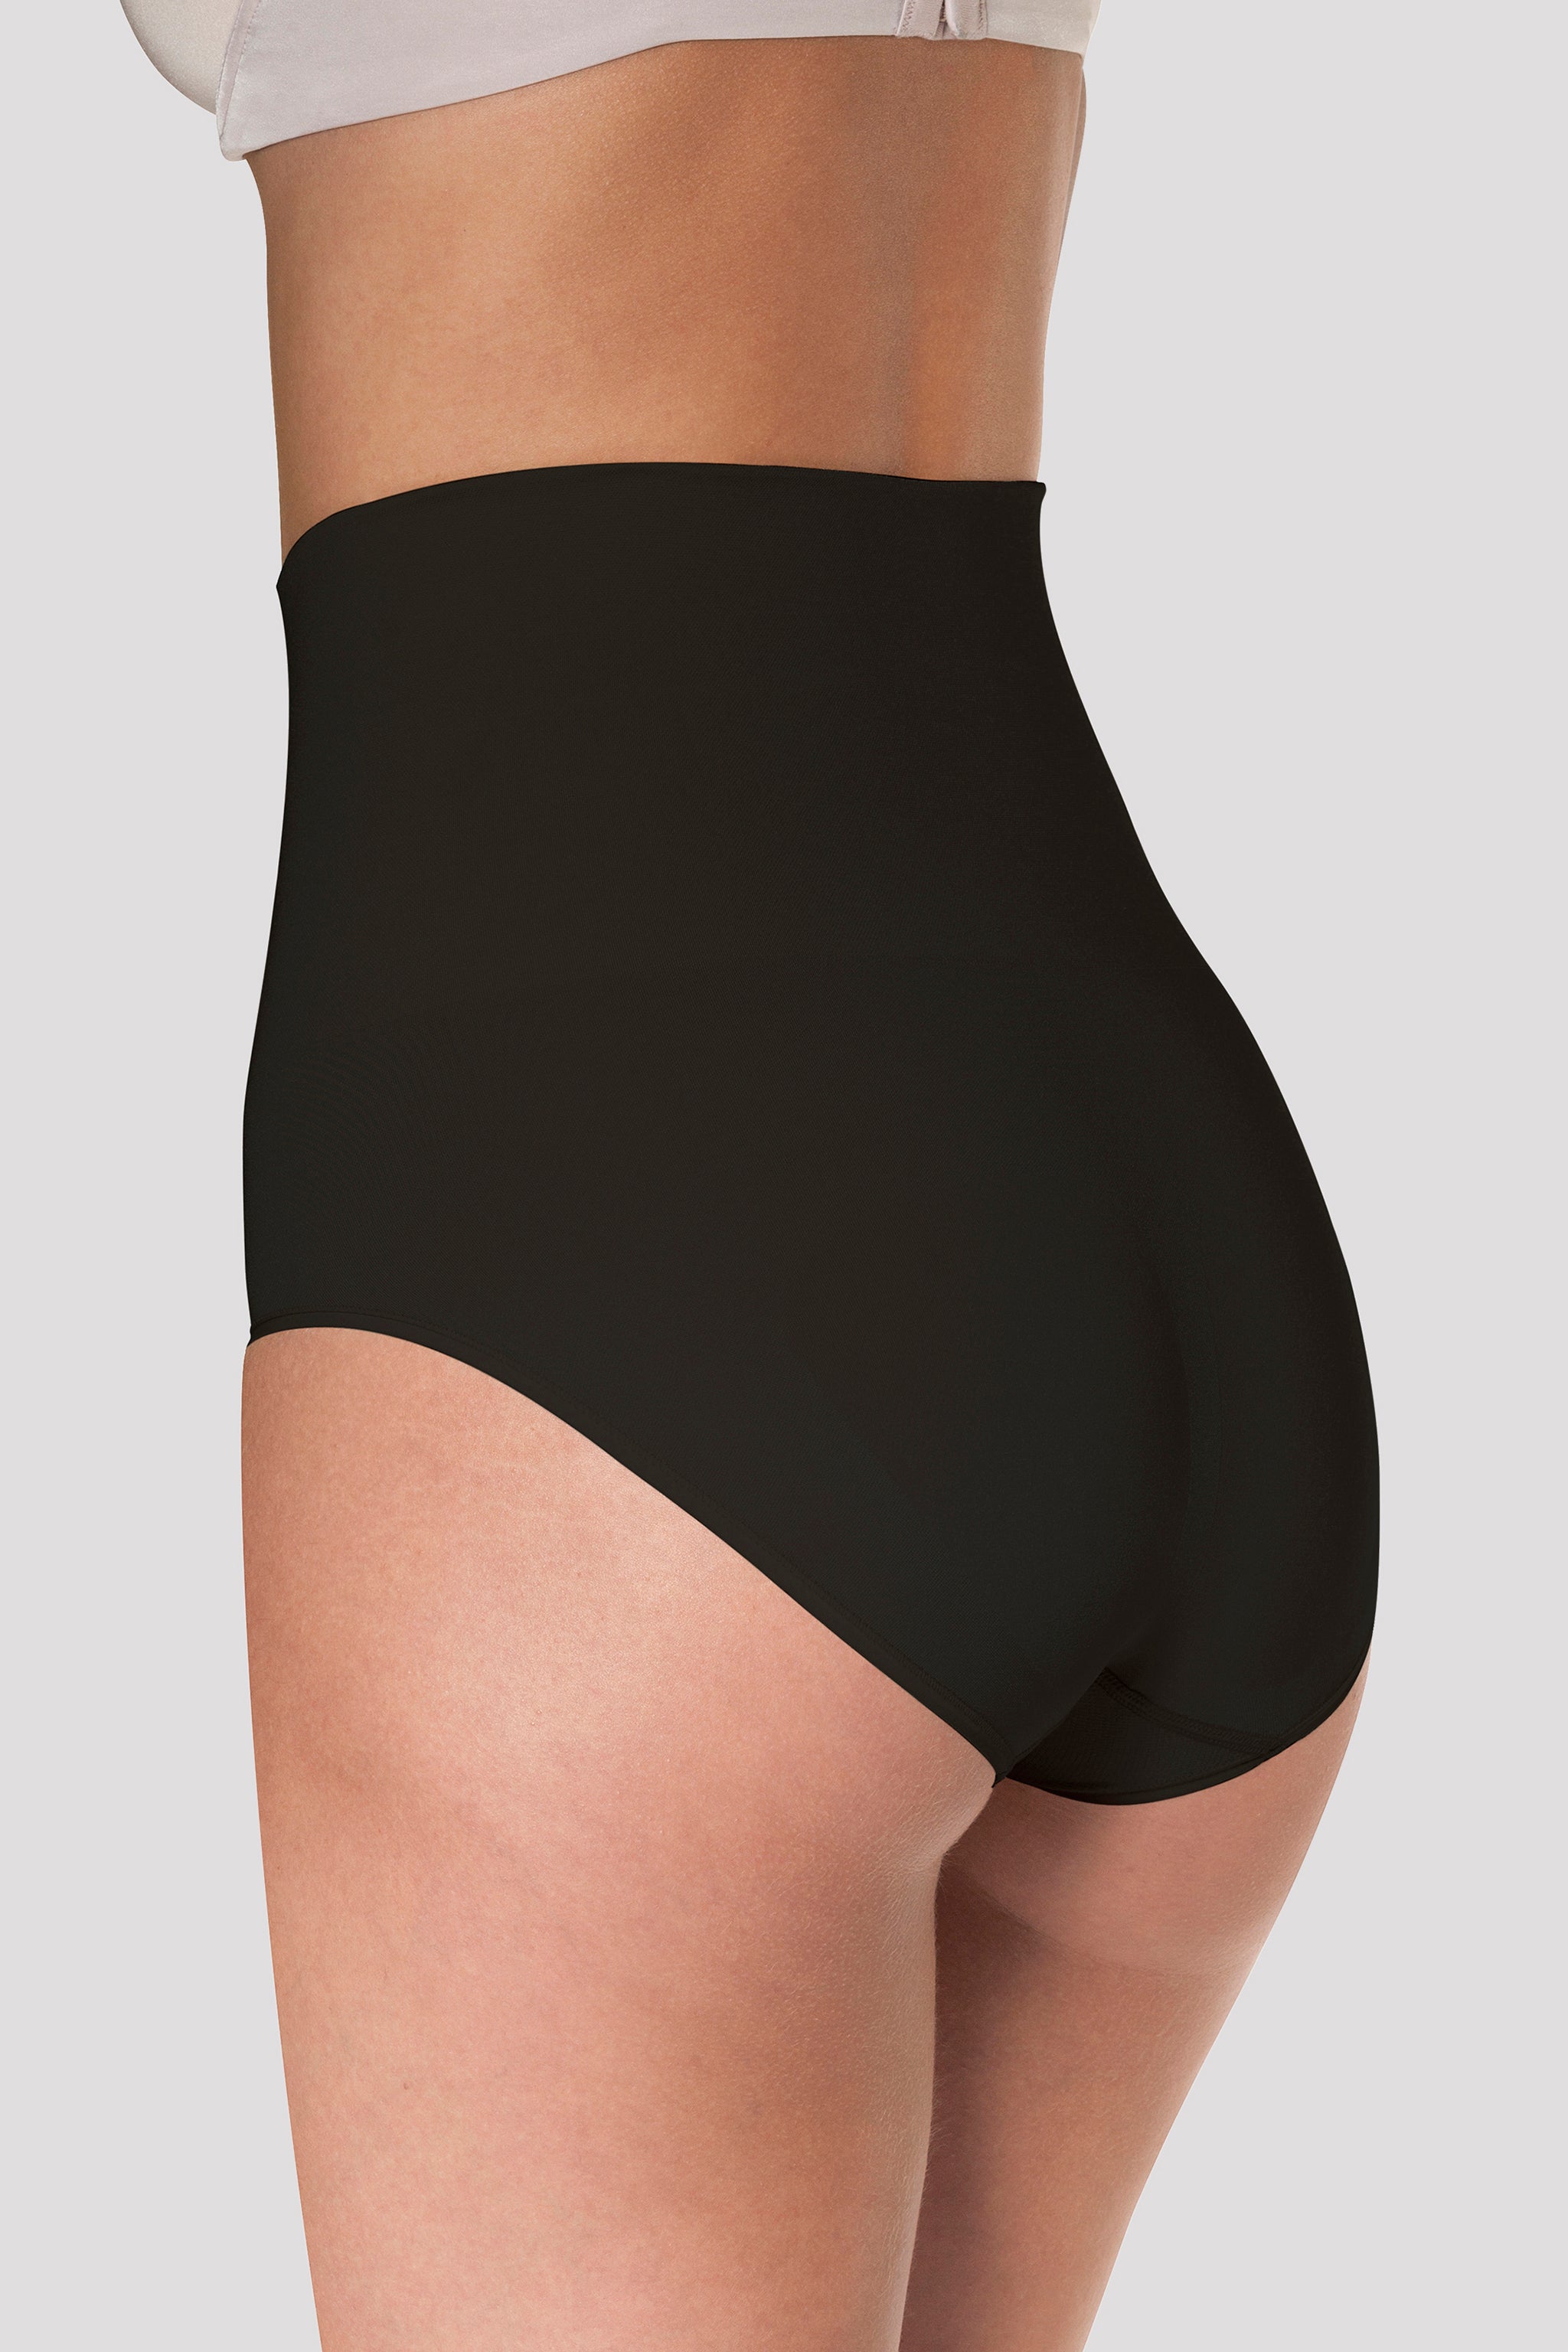 shapewear panty tummy control for women - Black